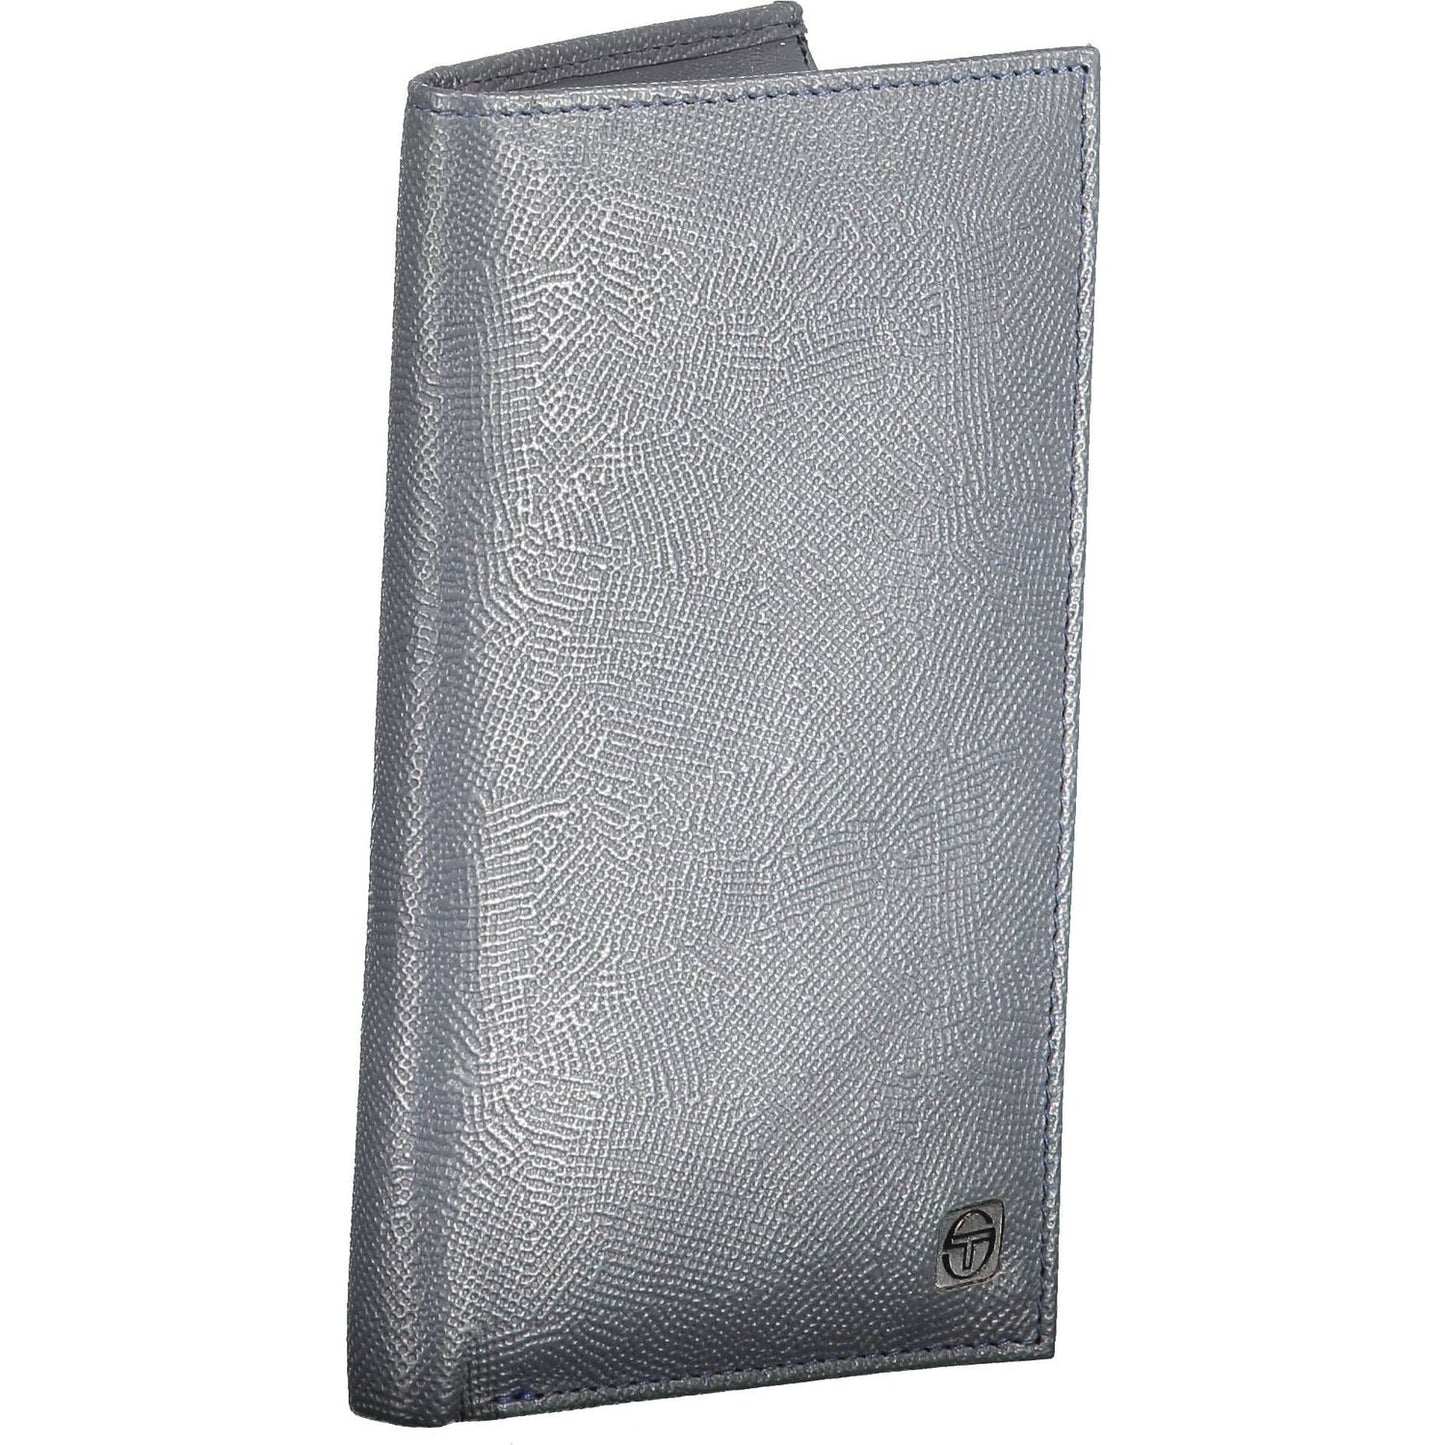 Sergio Tacchini Sleek Double Compartment Leather Wallet sleek-double-compartment-leather-wallet